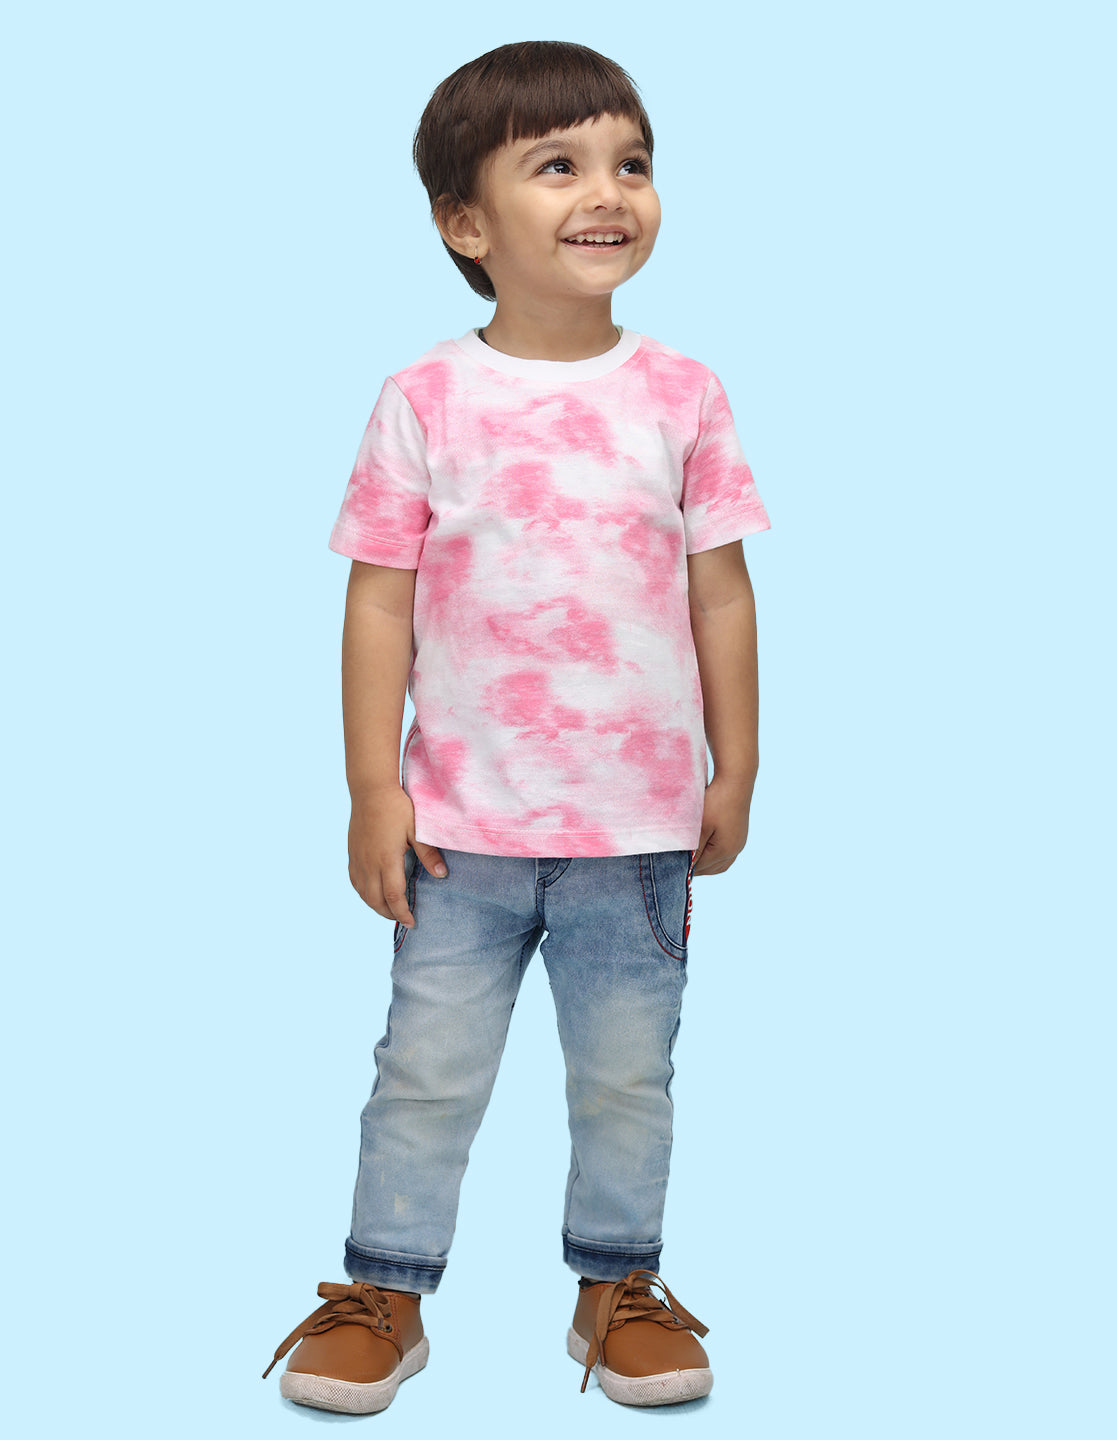 Nusyl solid pink infants tie & dye cotton rich t-shirt.